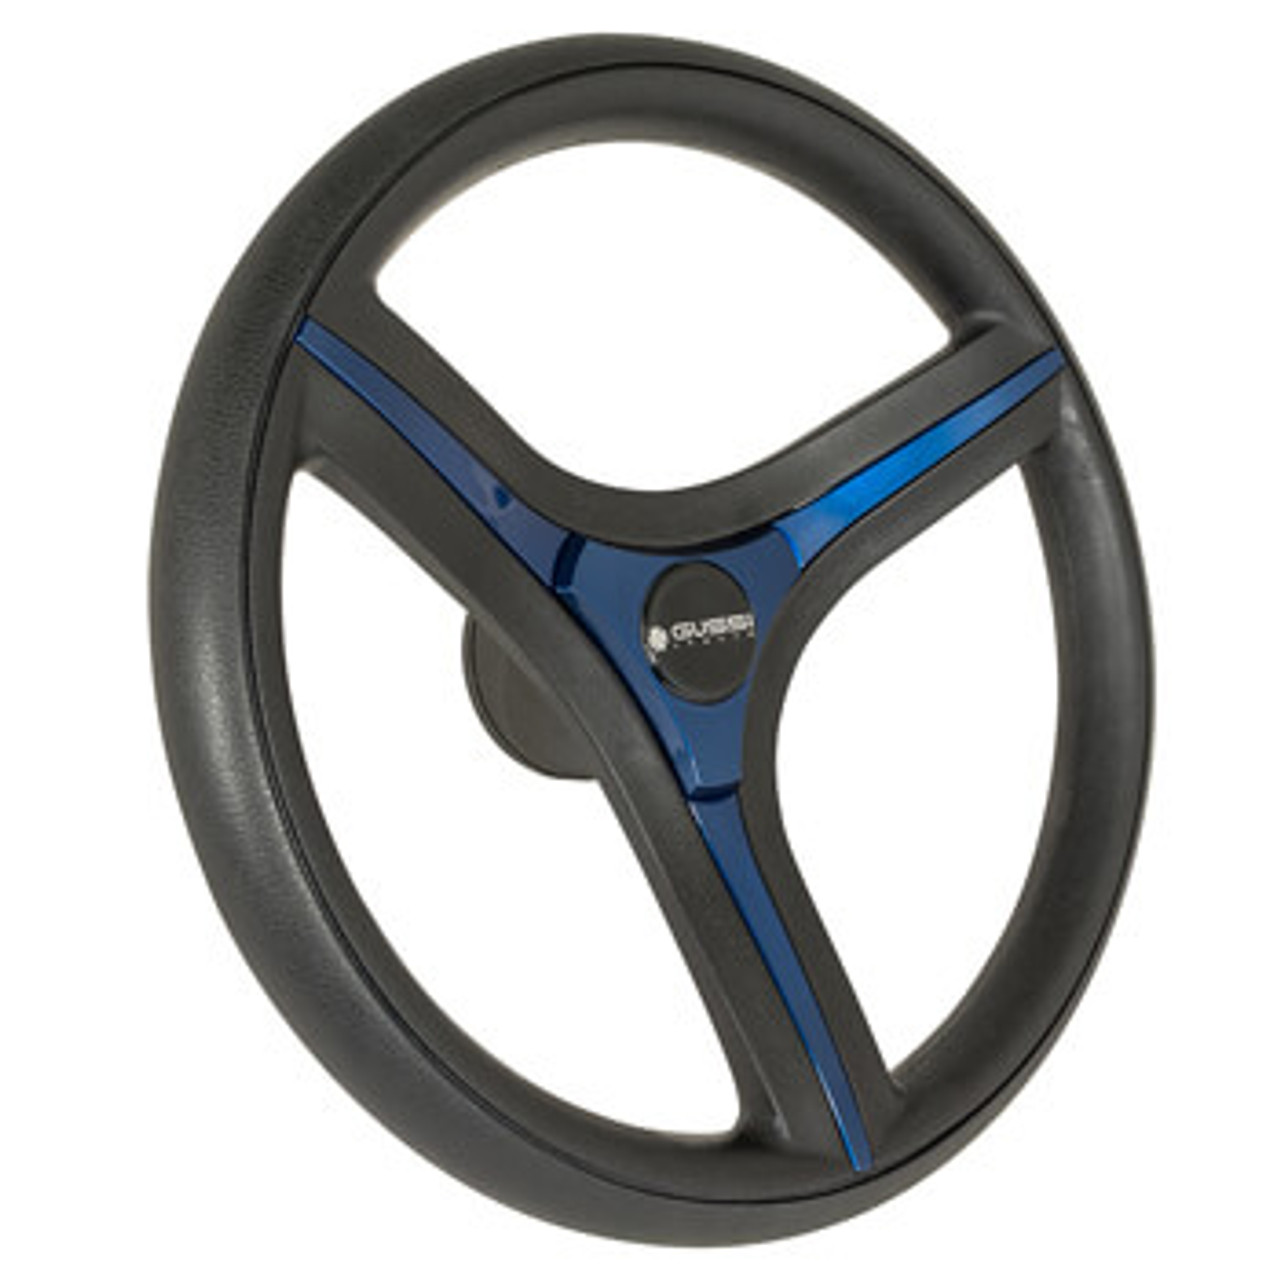 Gussi Italia Brenta Black/Blue Steering Wheel for Yamaha G16-Drive2 Golf Cart, 06-140